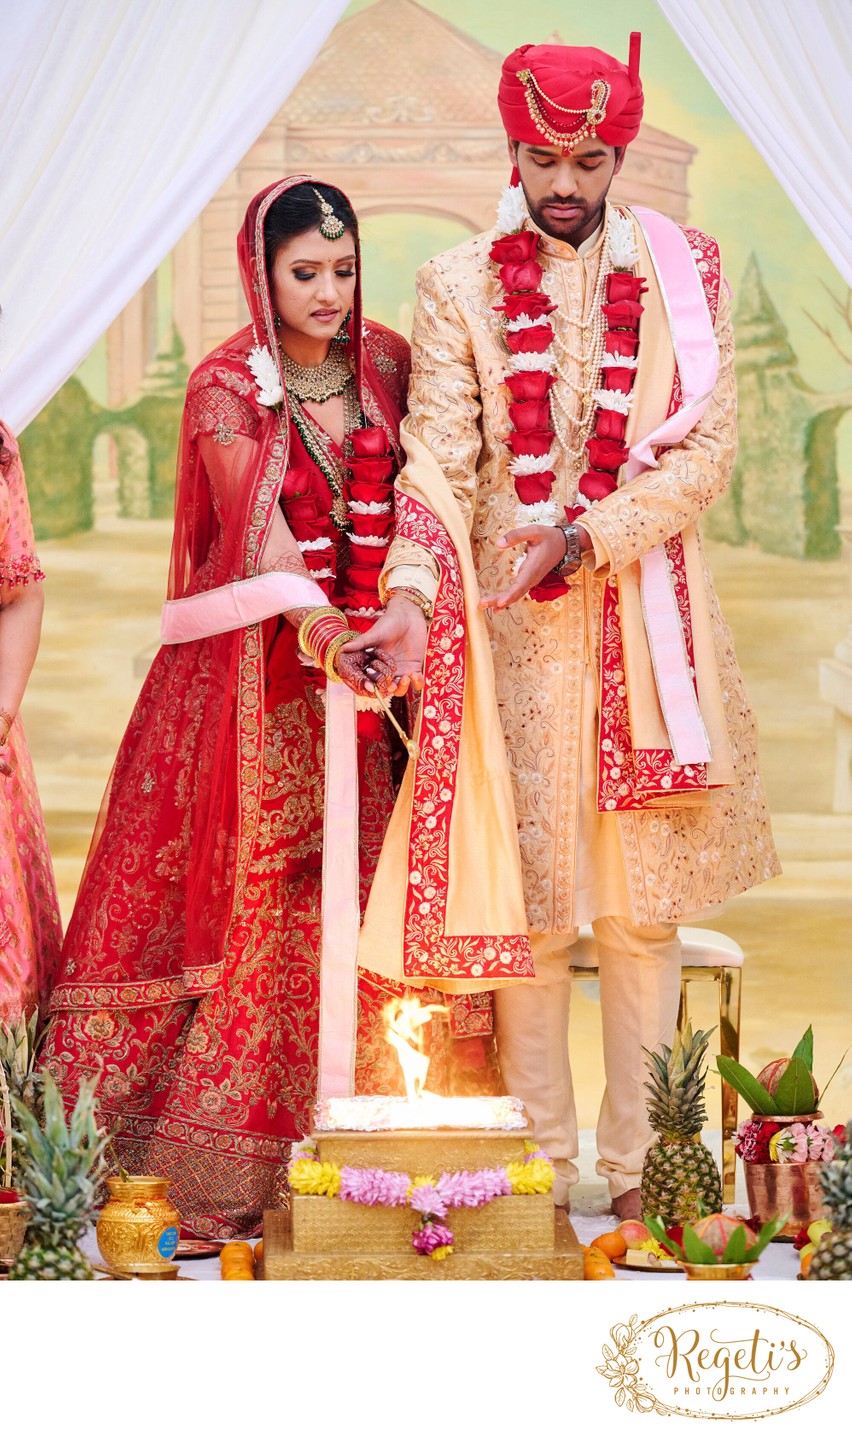 Bride and Groom Performing Hindu Rituals